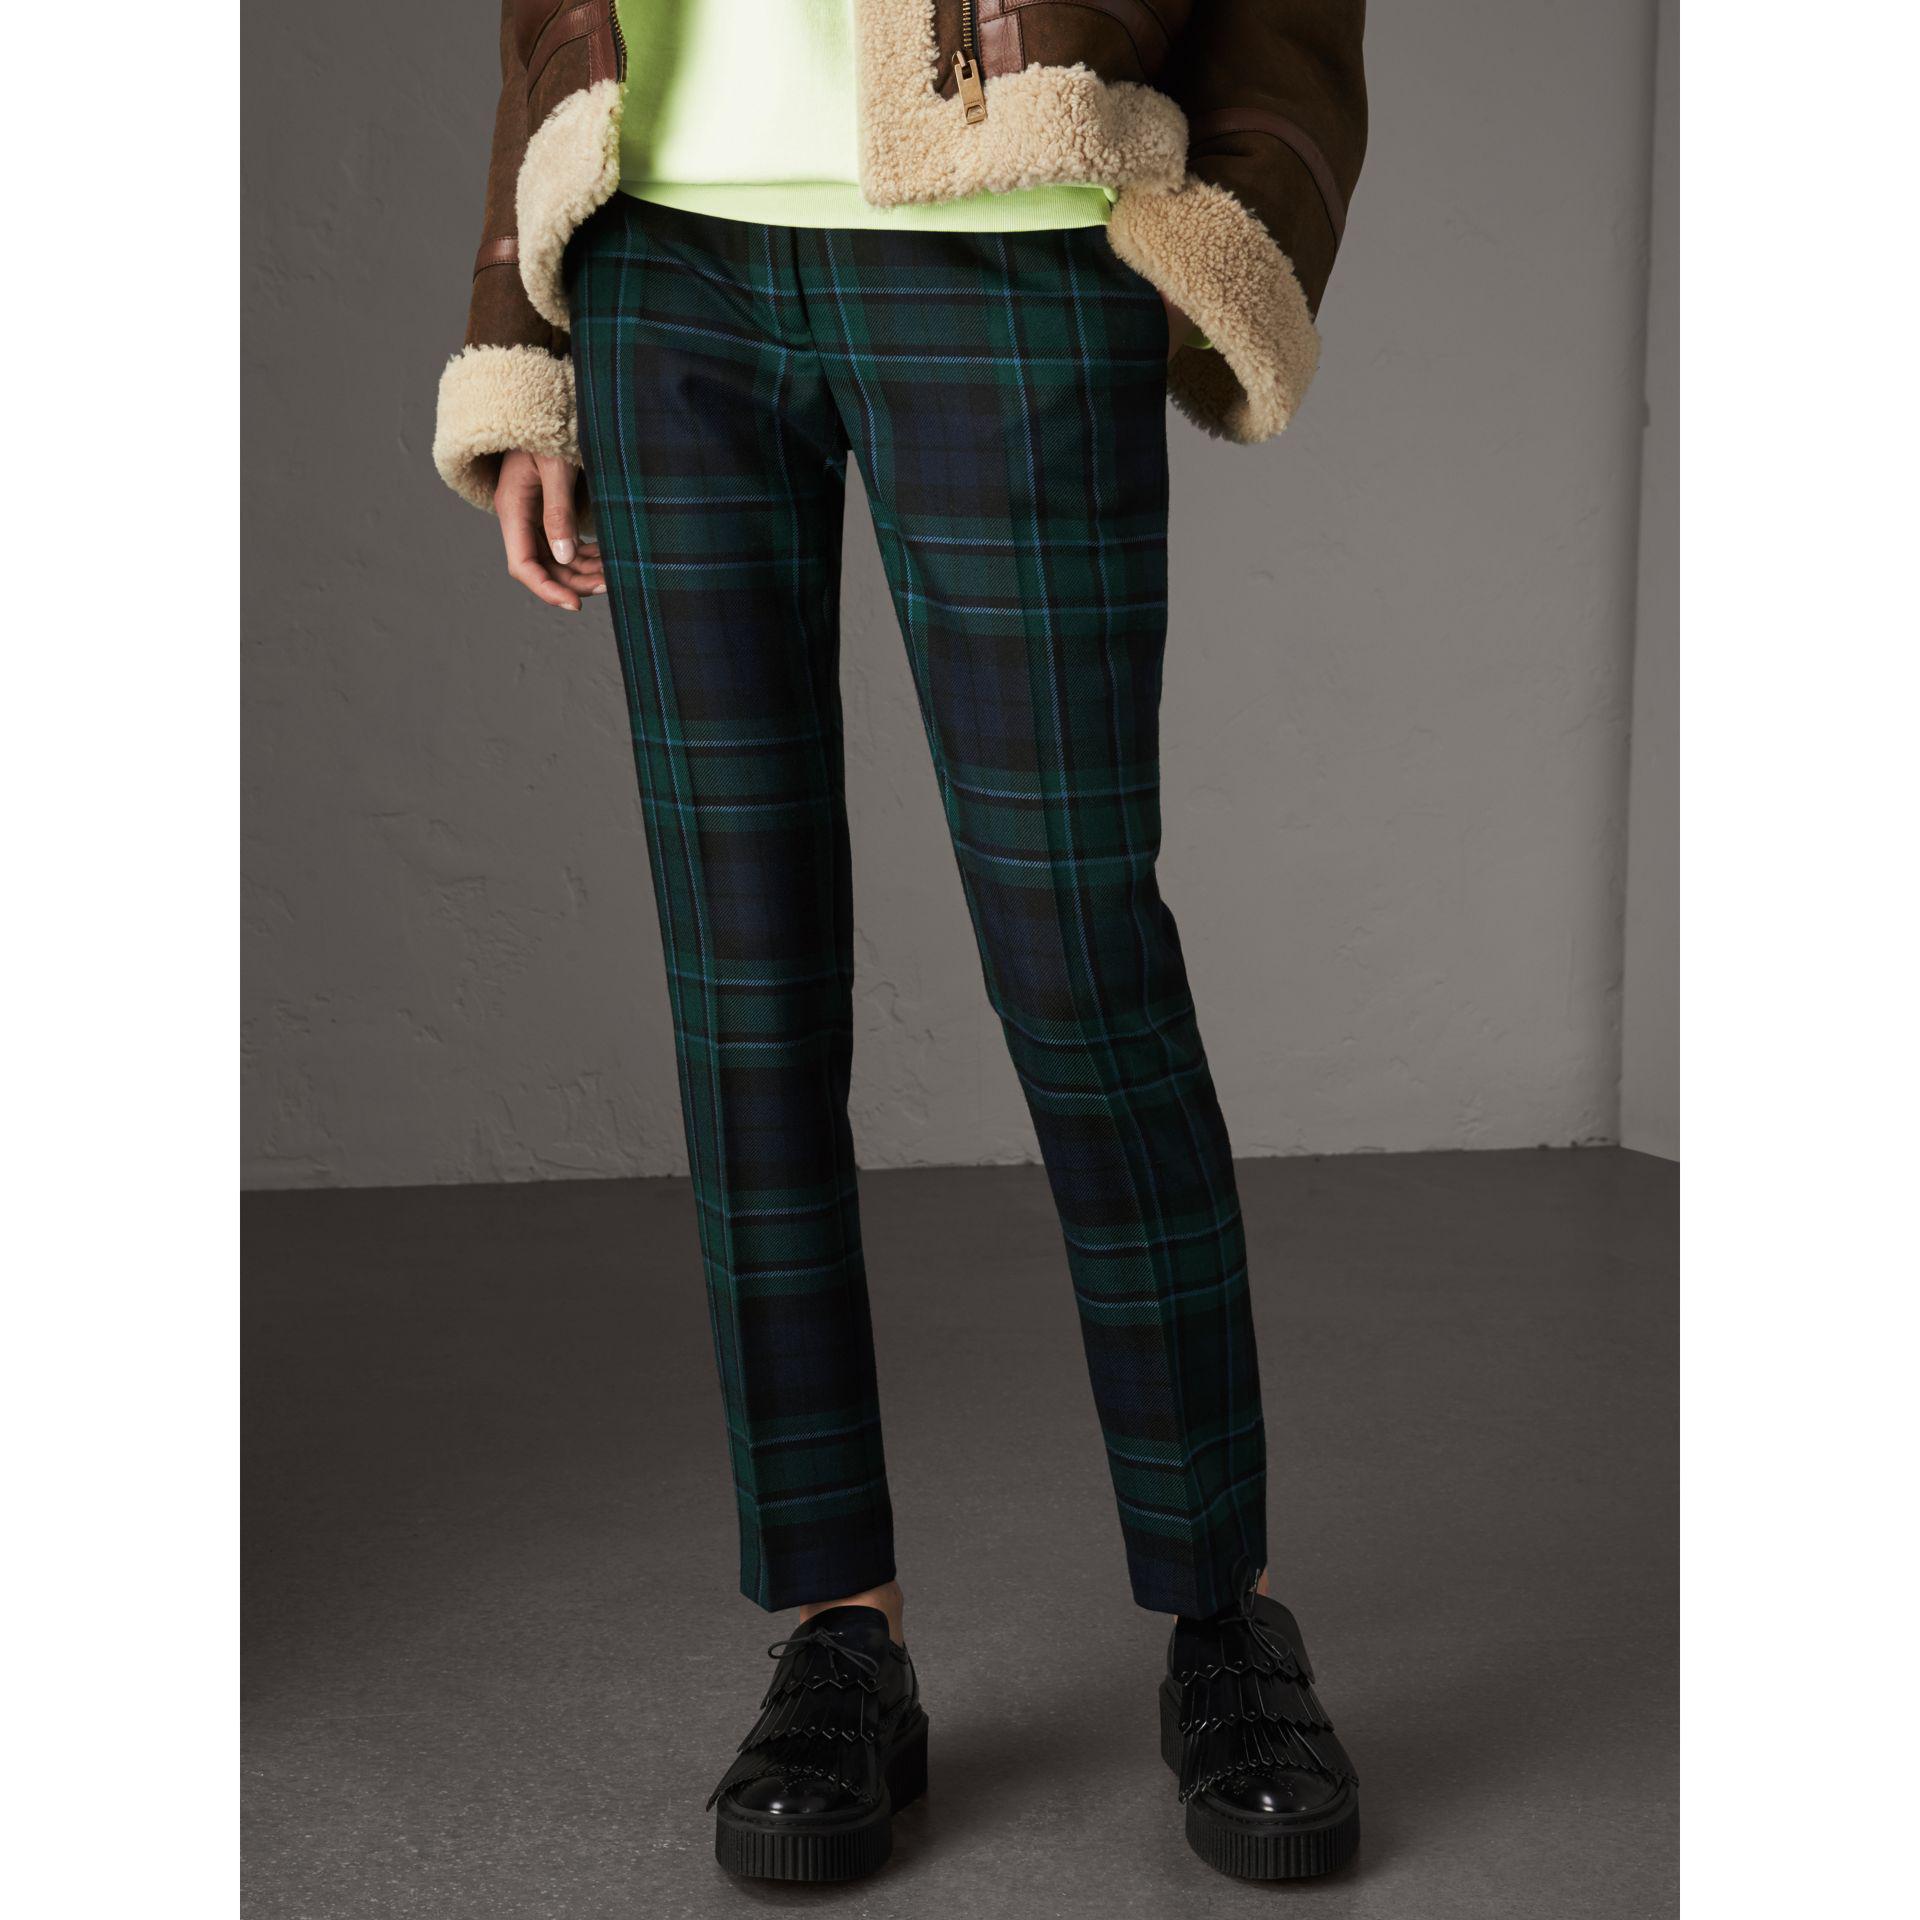 burberry green pants